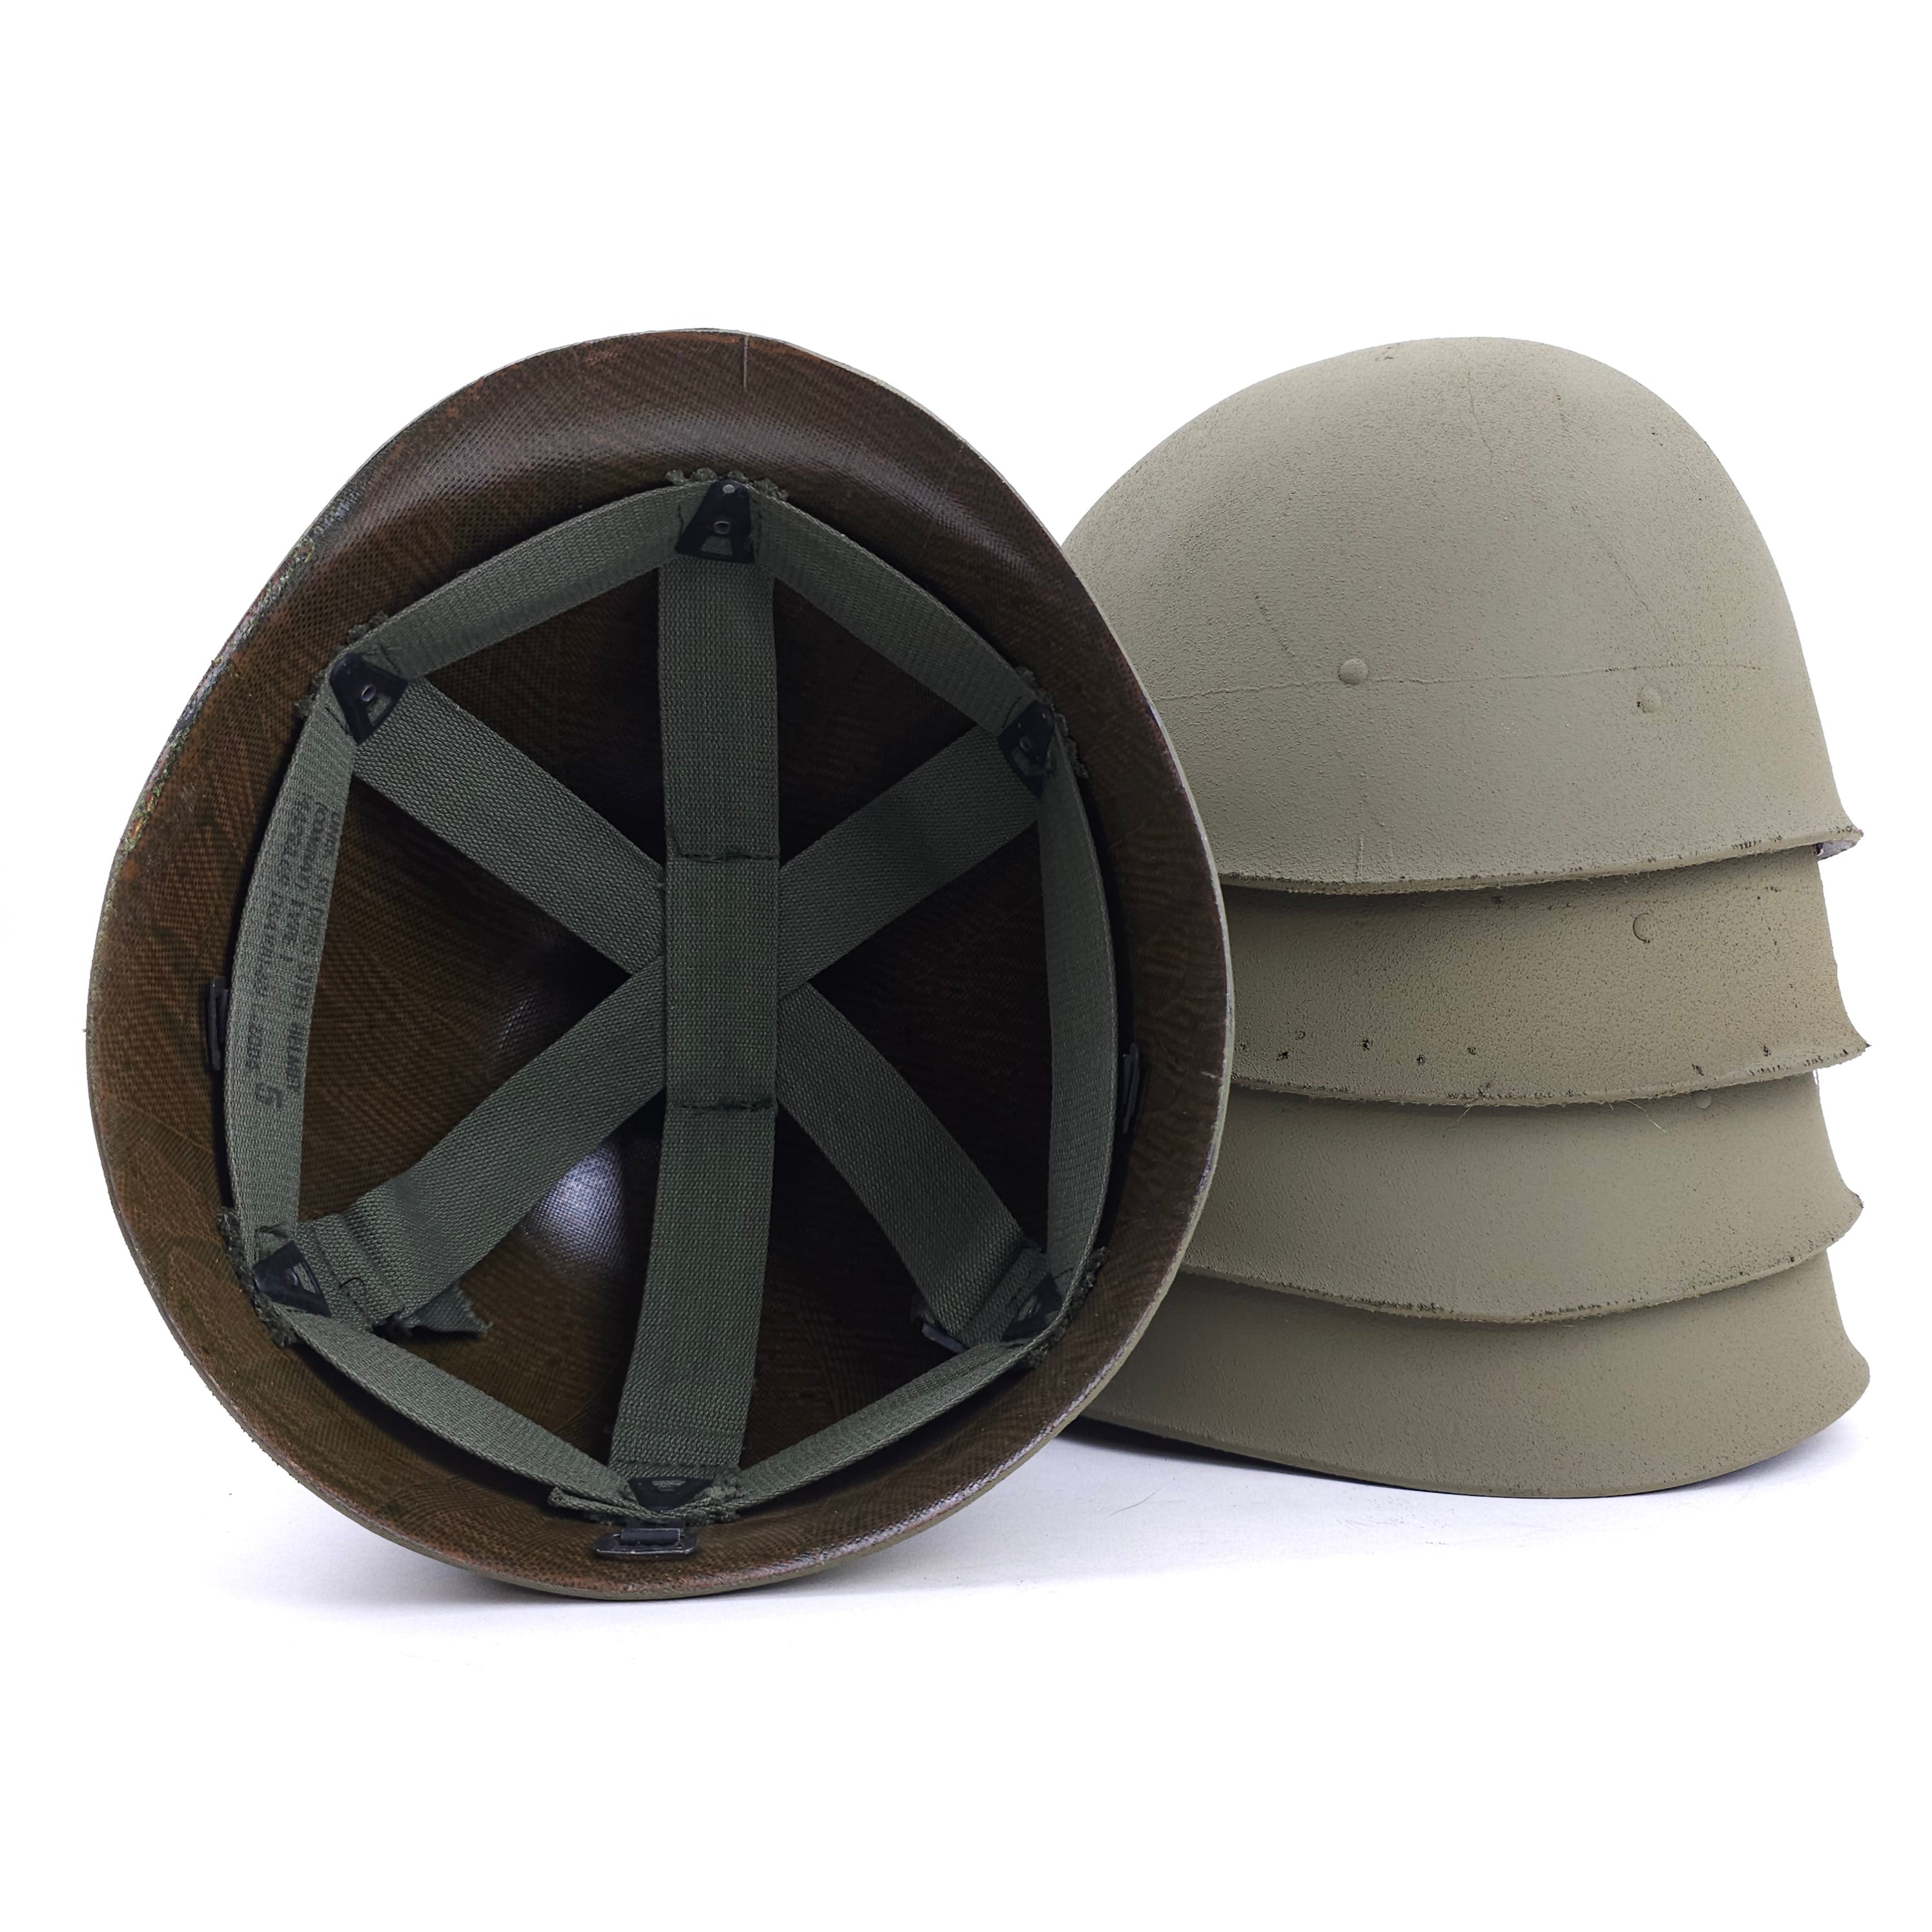 Doublure de casque M1 - Fin de la guerre du Vietnam - Original repeint